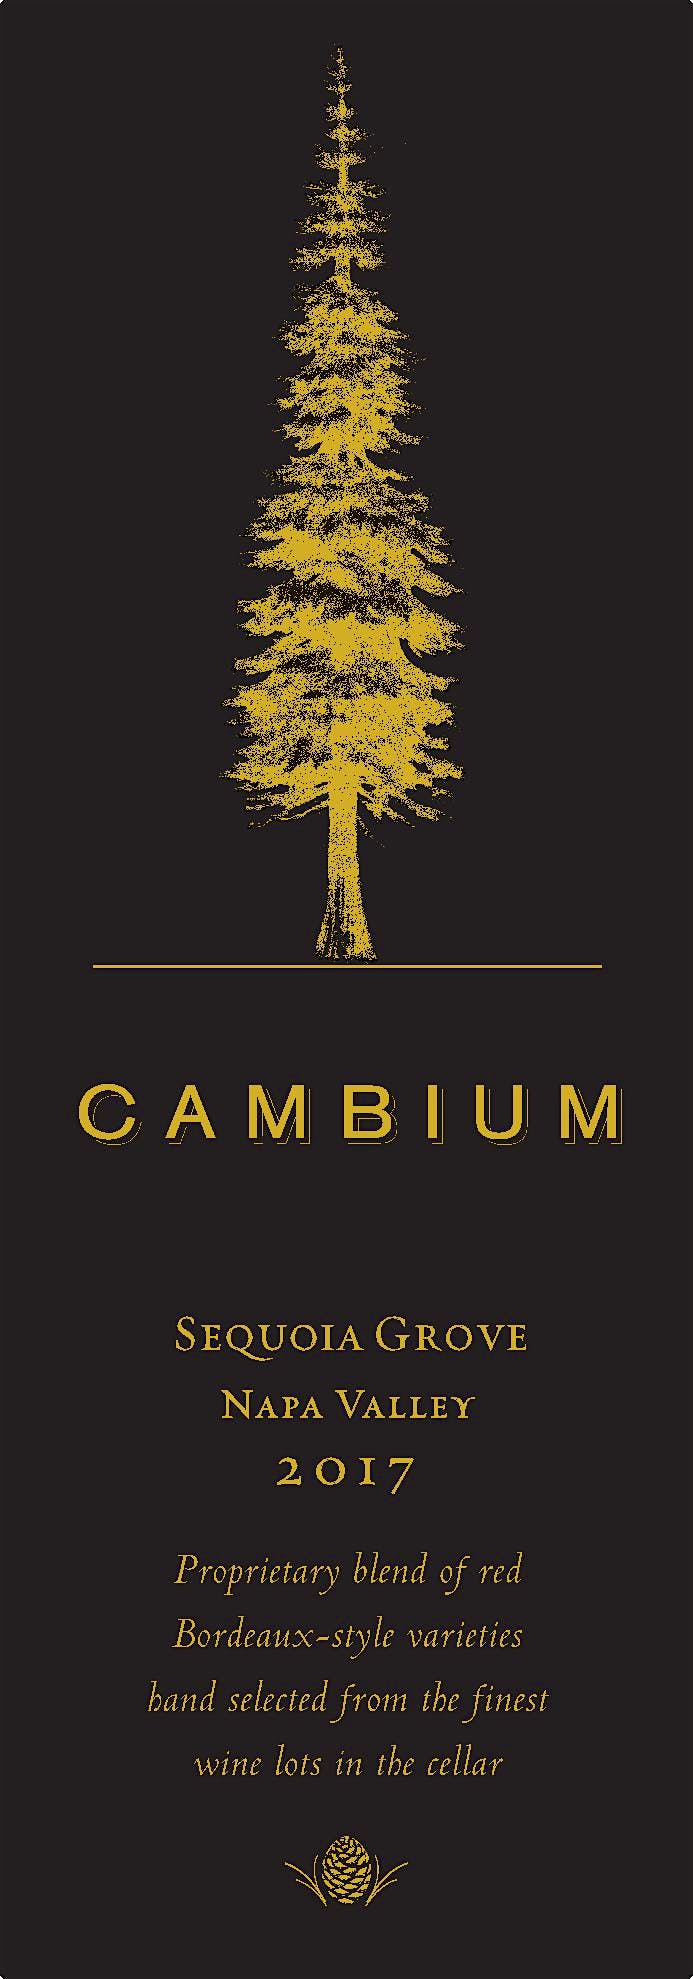 Label for Sequoia Grove